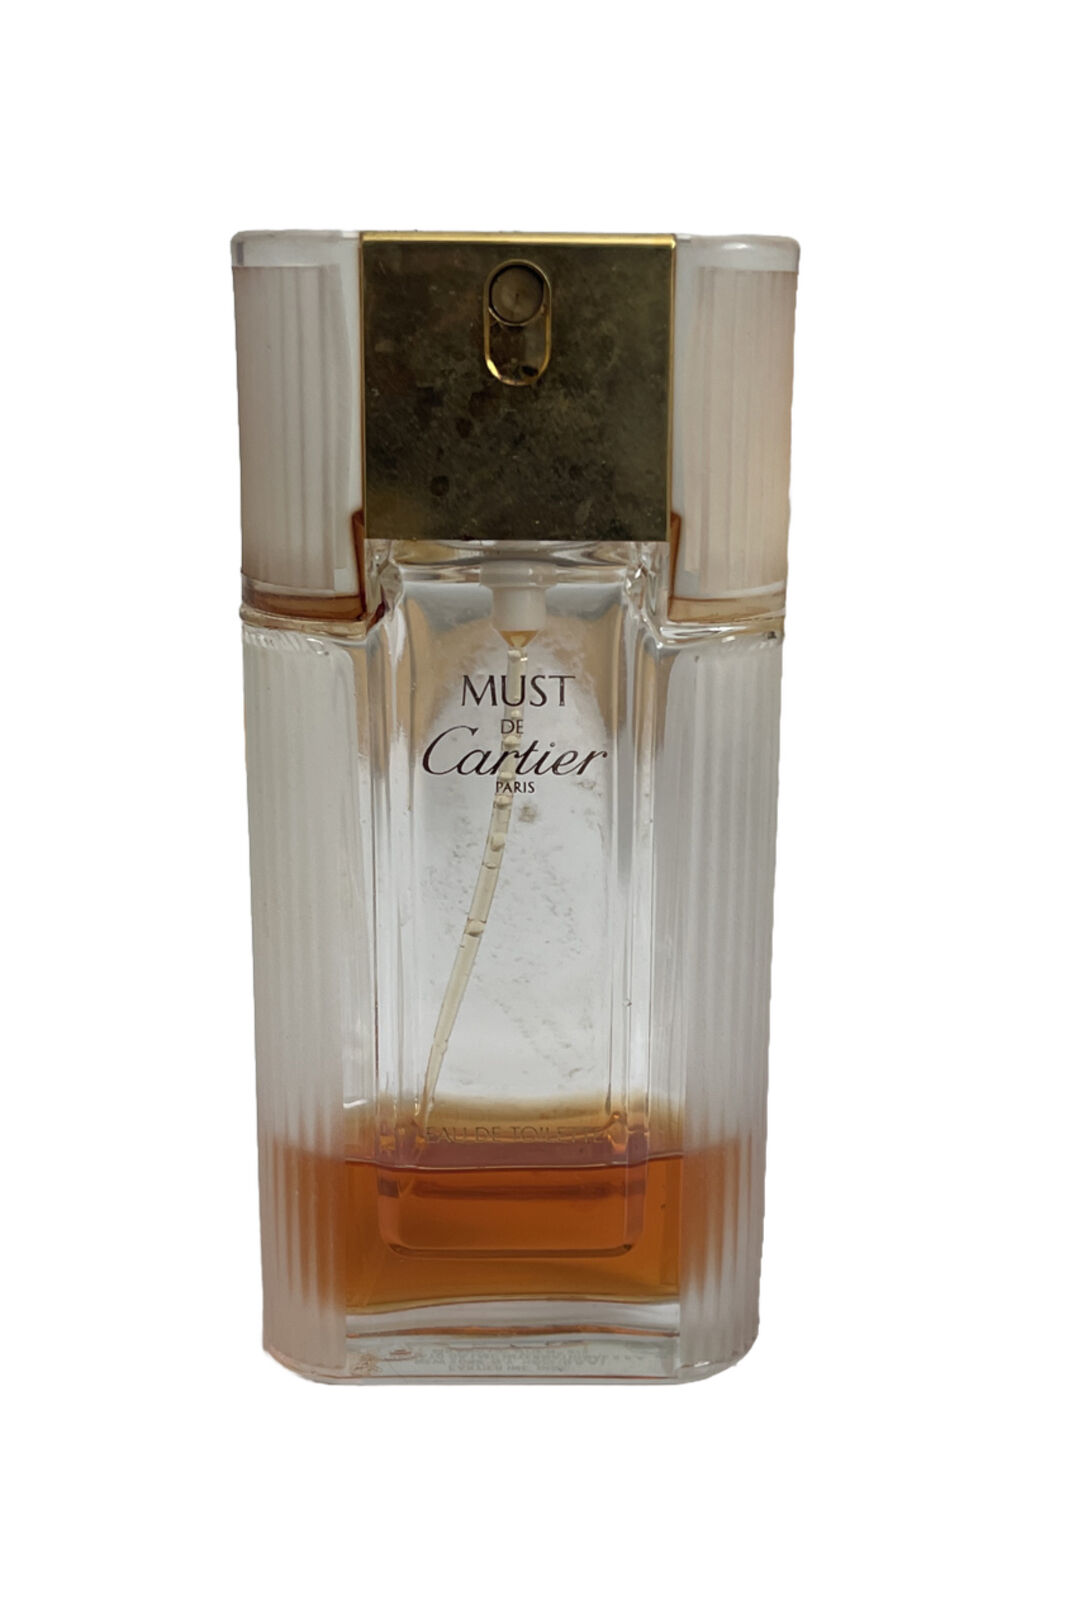 Must de Cartier Paris EDT Spray 1.6oz 50ml 10% Full Vintage Perfume